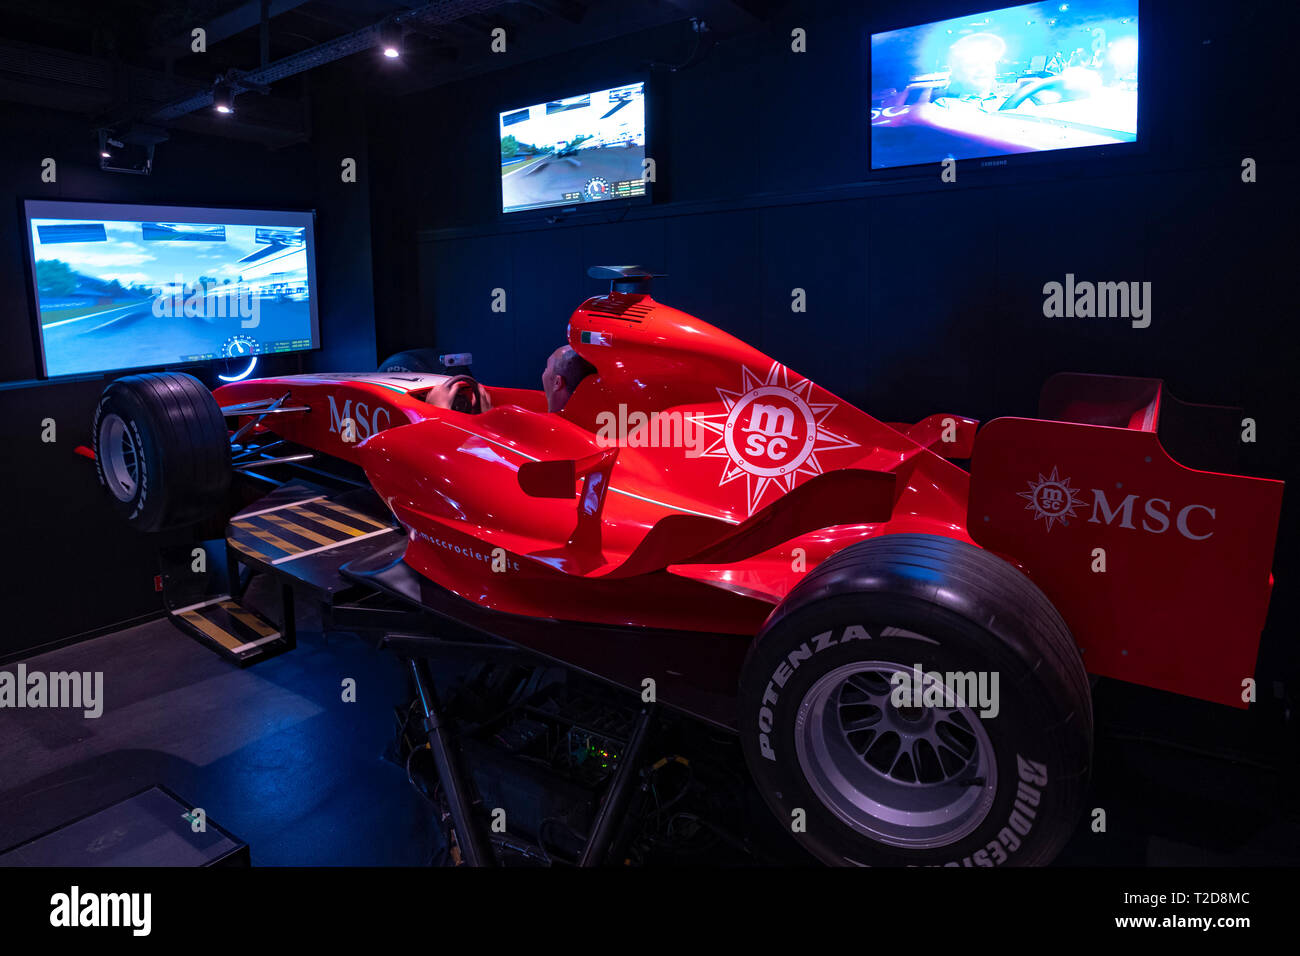 Formula 1 car simulator inside the MSC Preziosa cruise ship Stock Photo